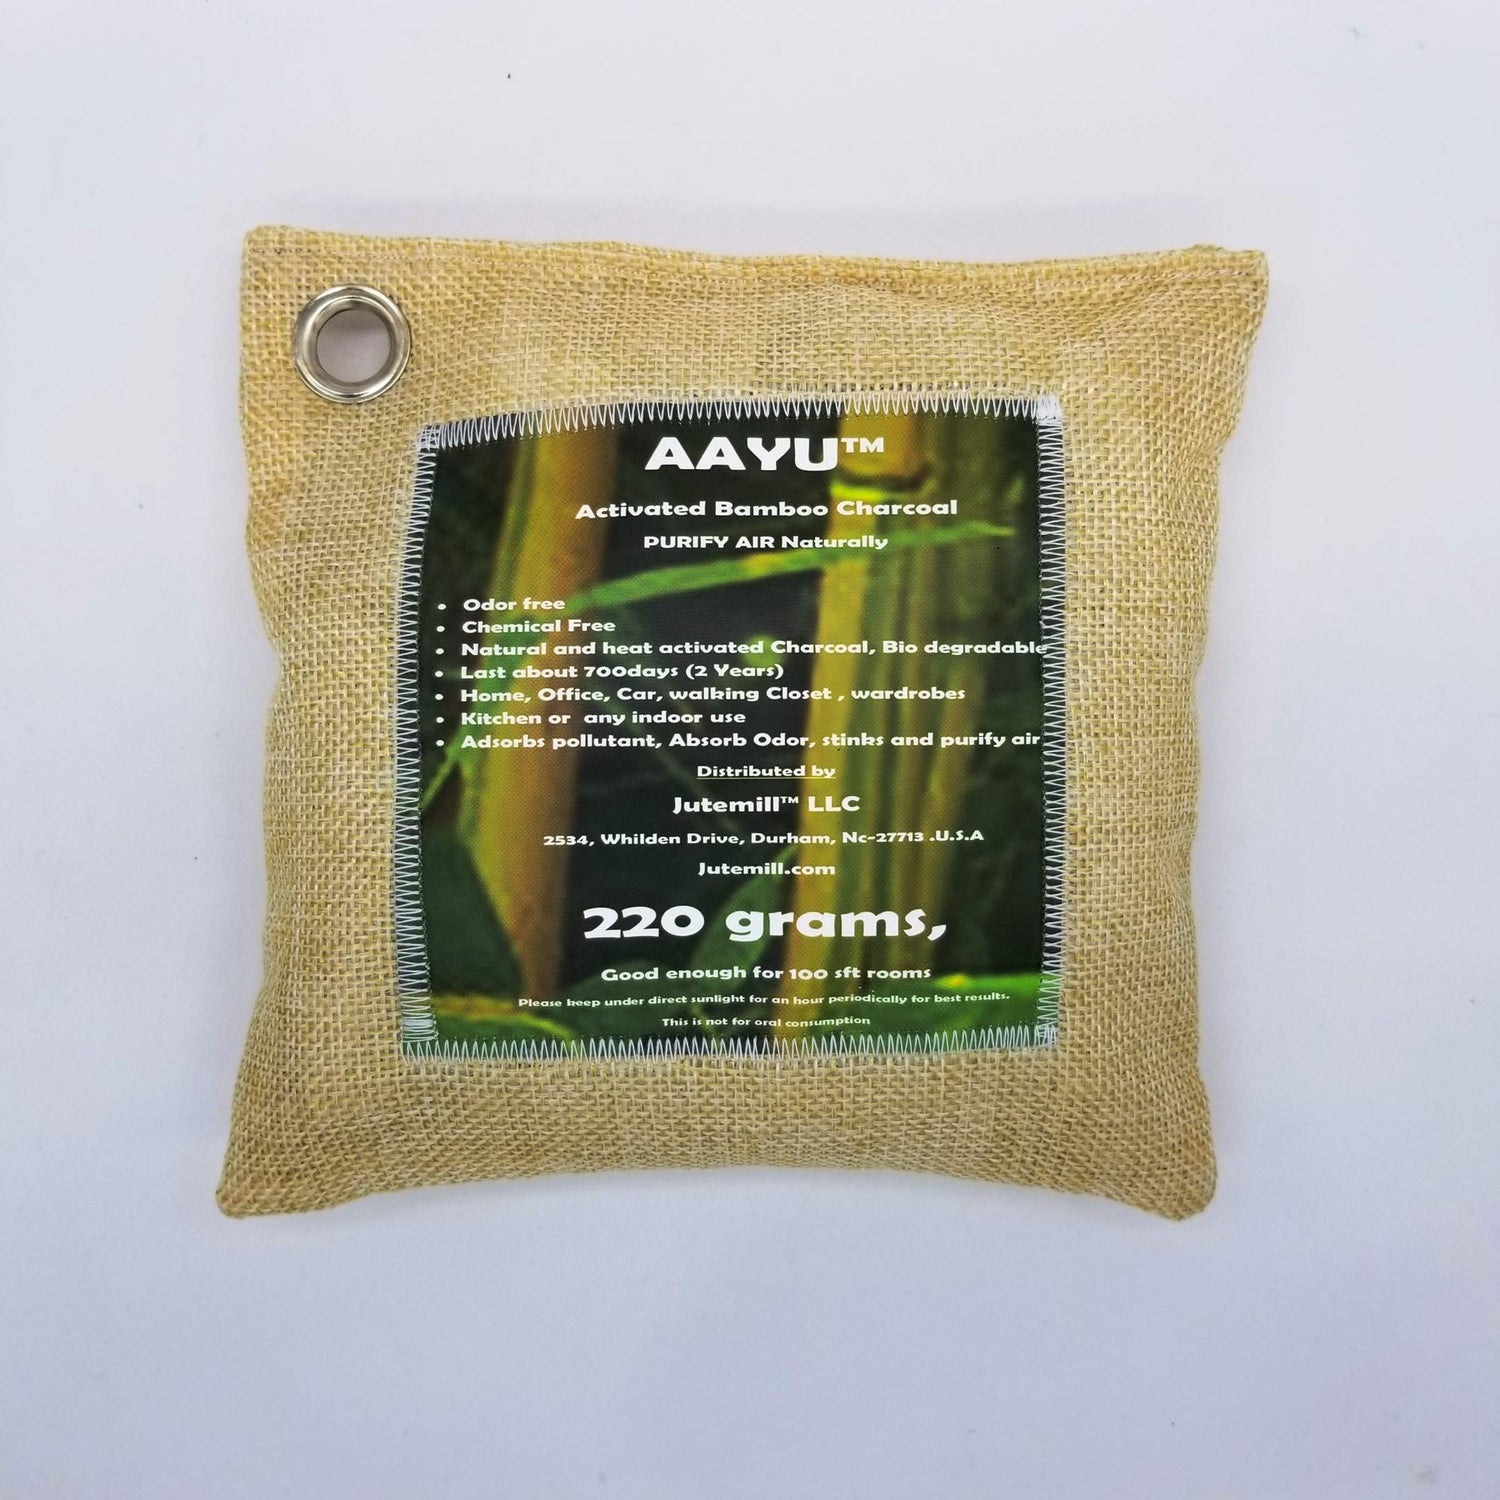 Air purifying bag consist of 100% Natural Activated Bamboo Charcoal